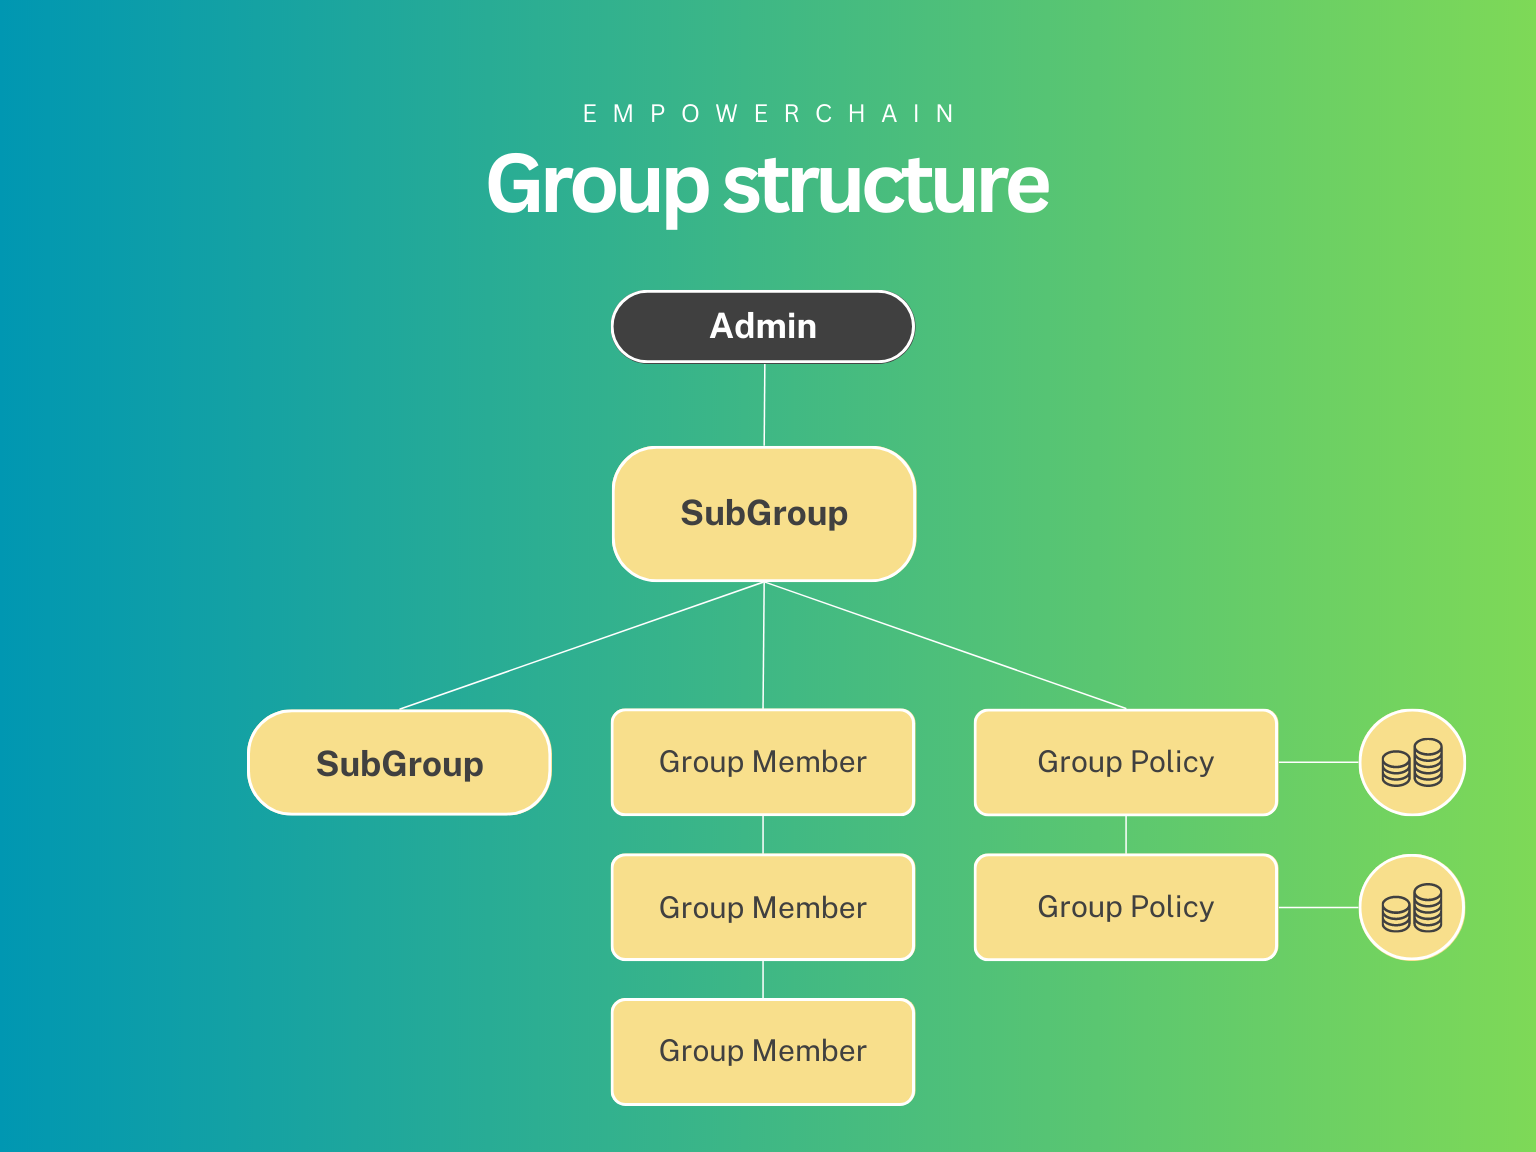 Group structure details